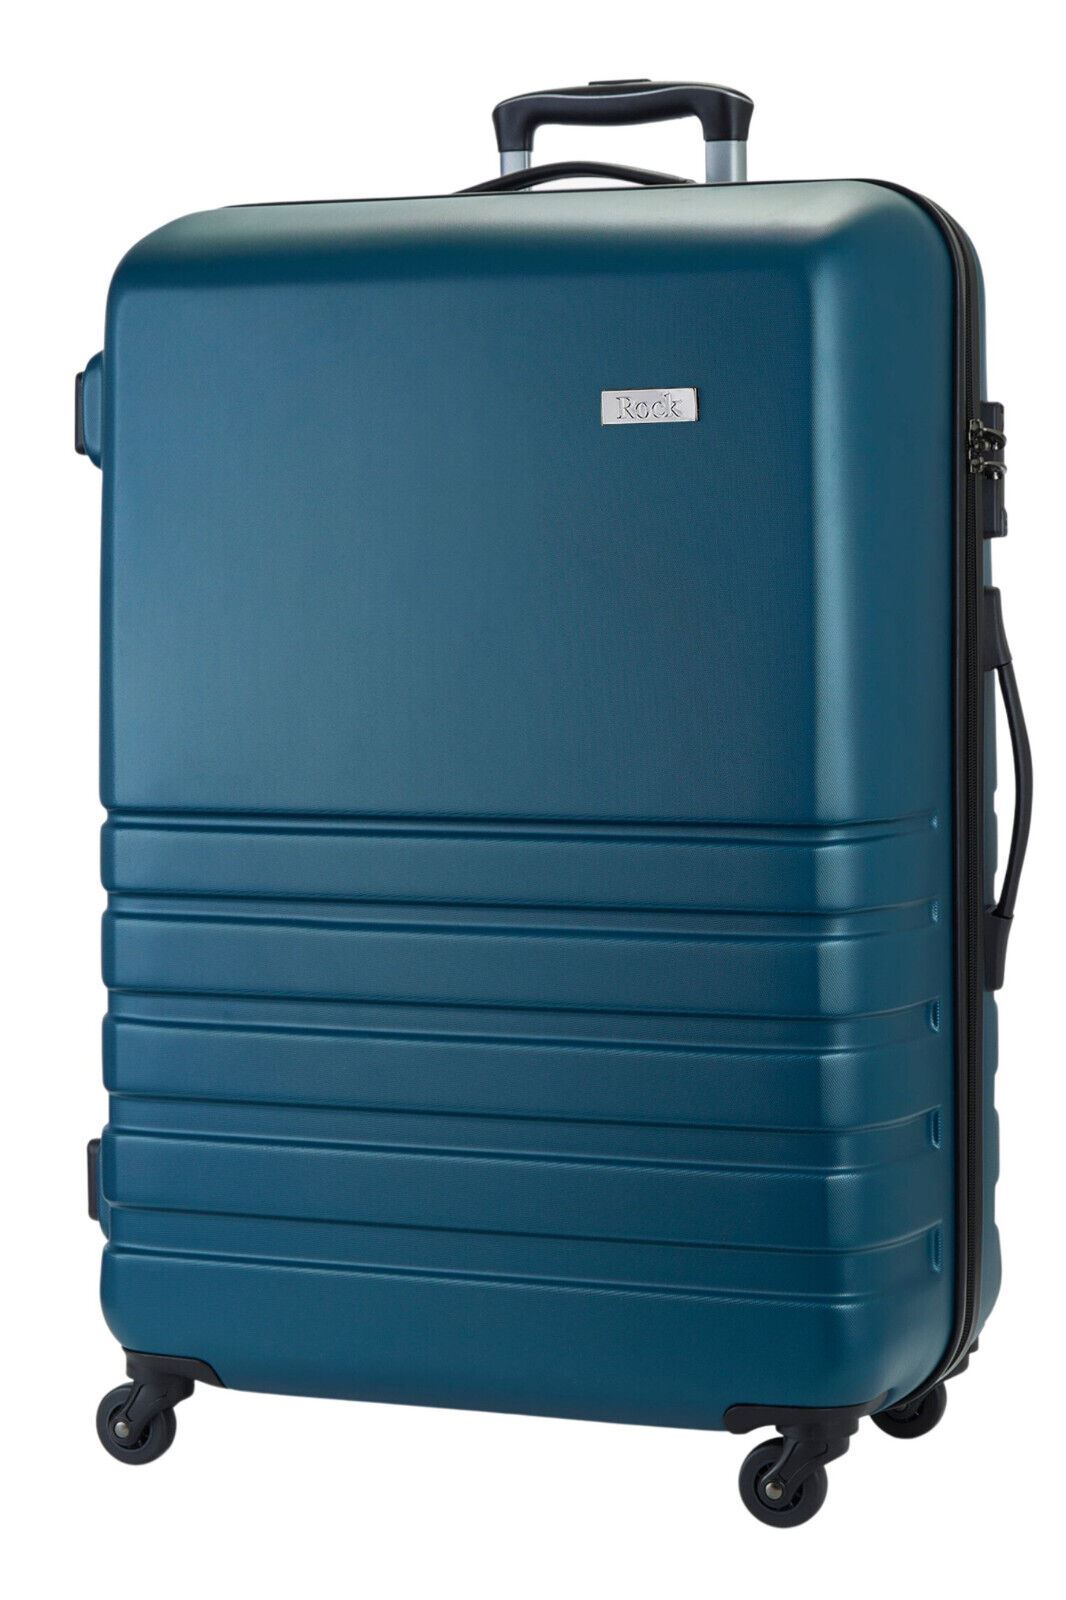 Hard Shell Teal Blue Suitcase Set 4 Wheel Cabin Luggage Trolley Travel Bag